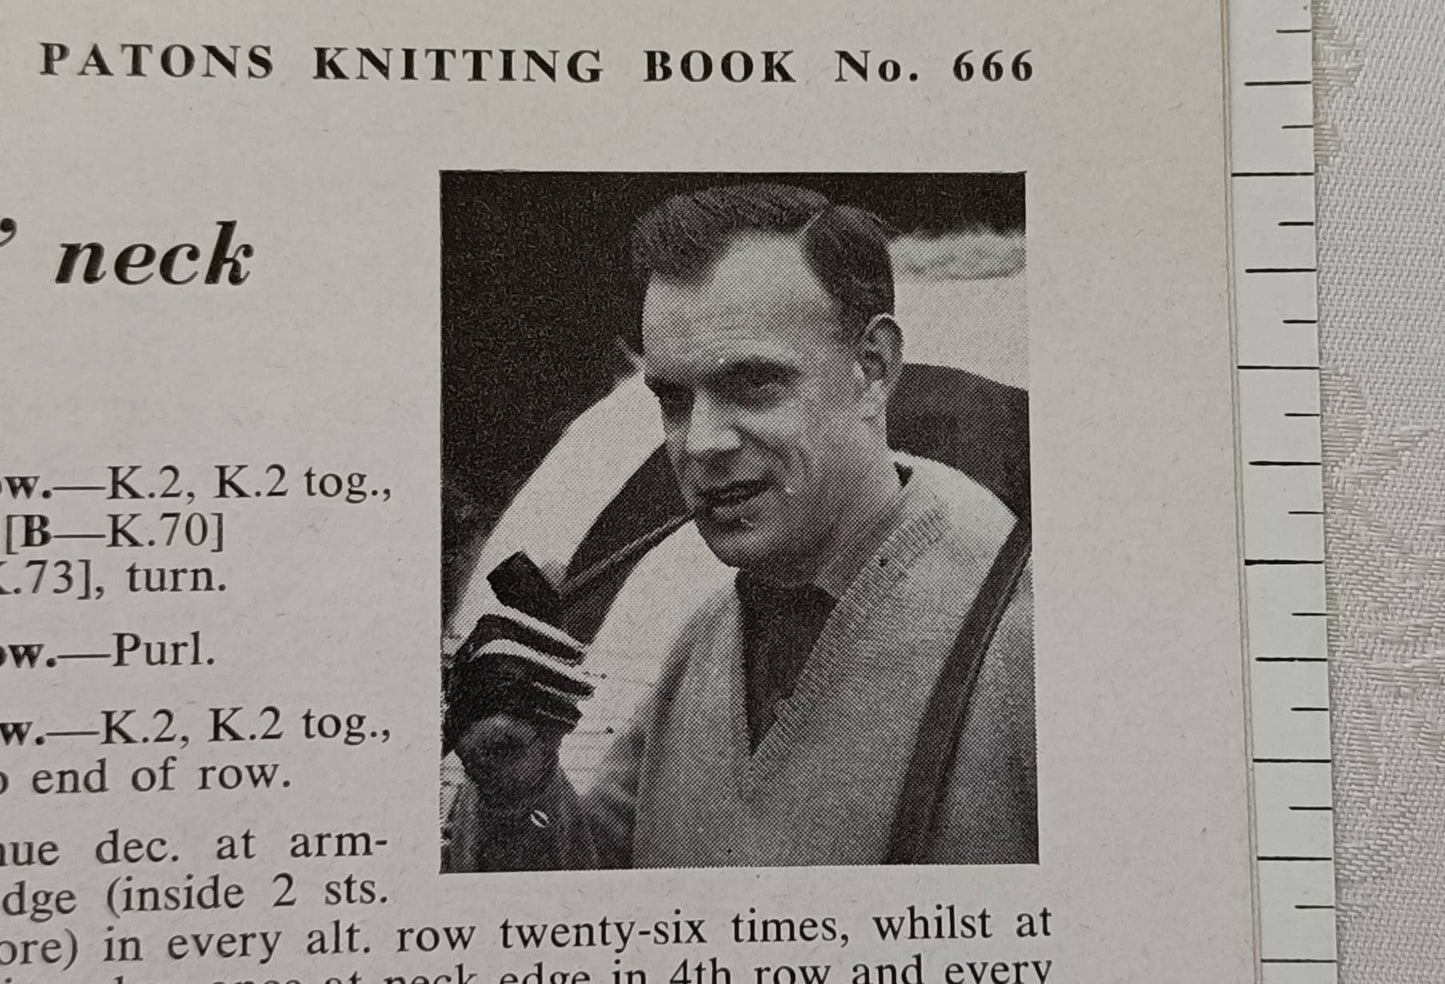 Patons knitting book 666 knitting patterns for men.